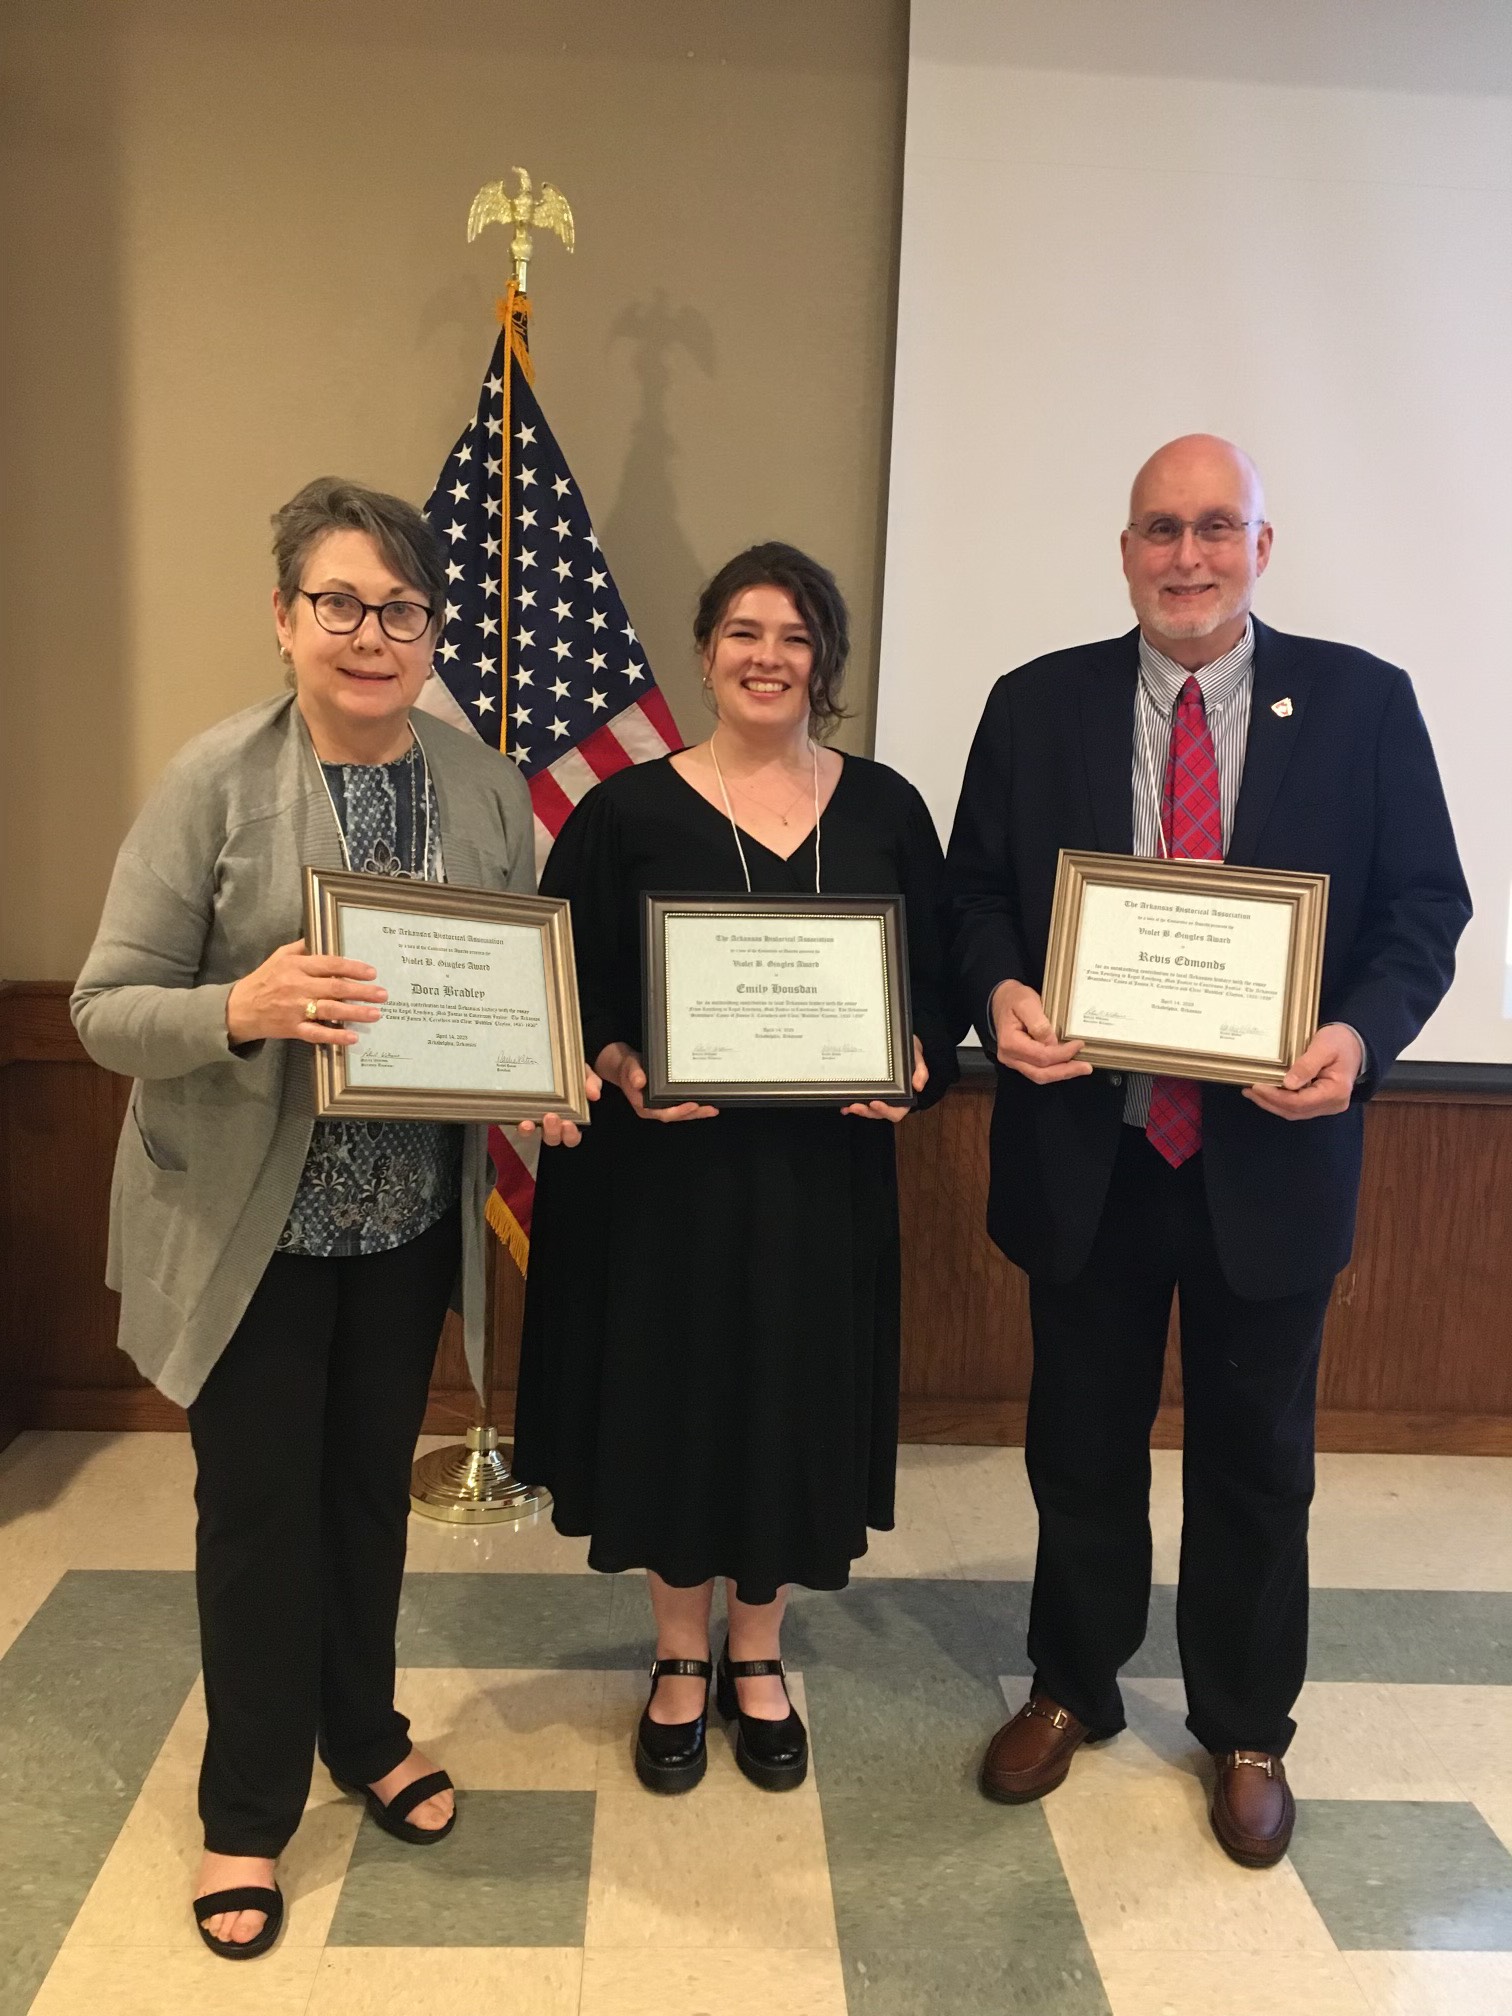 UA Little Rock students Dora Bradley, Emily Housdam, and Revis Edmonds receive the Gingles Award from the Arkansas Historical Association.